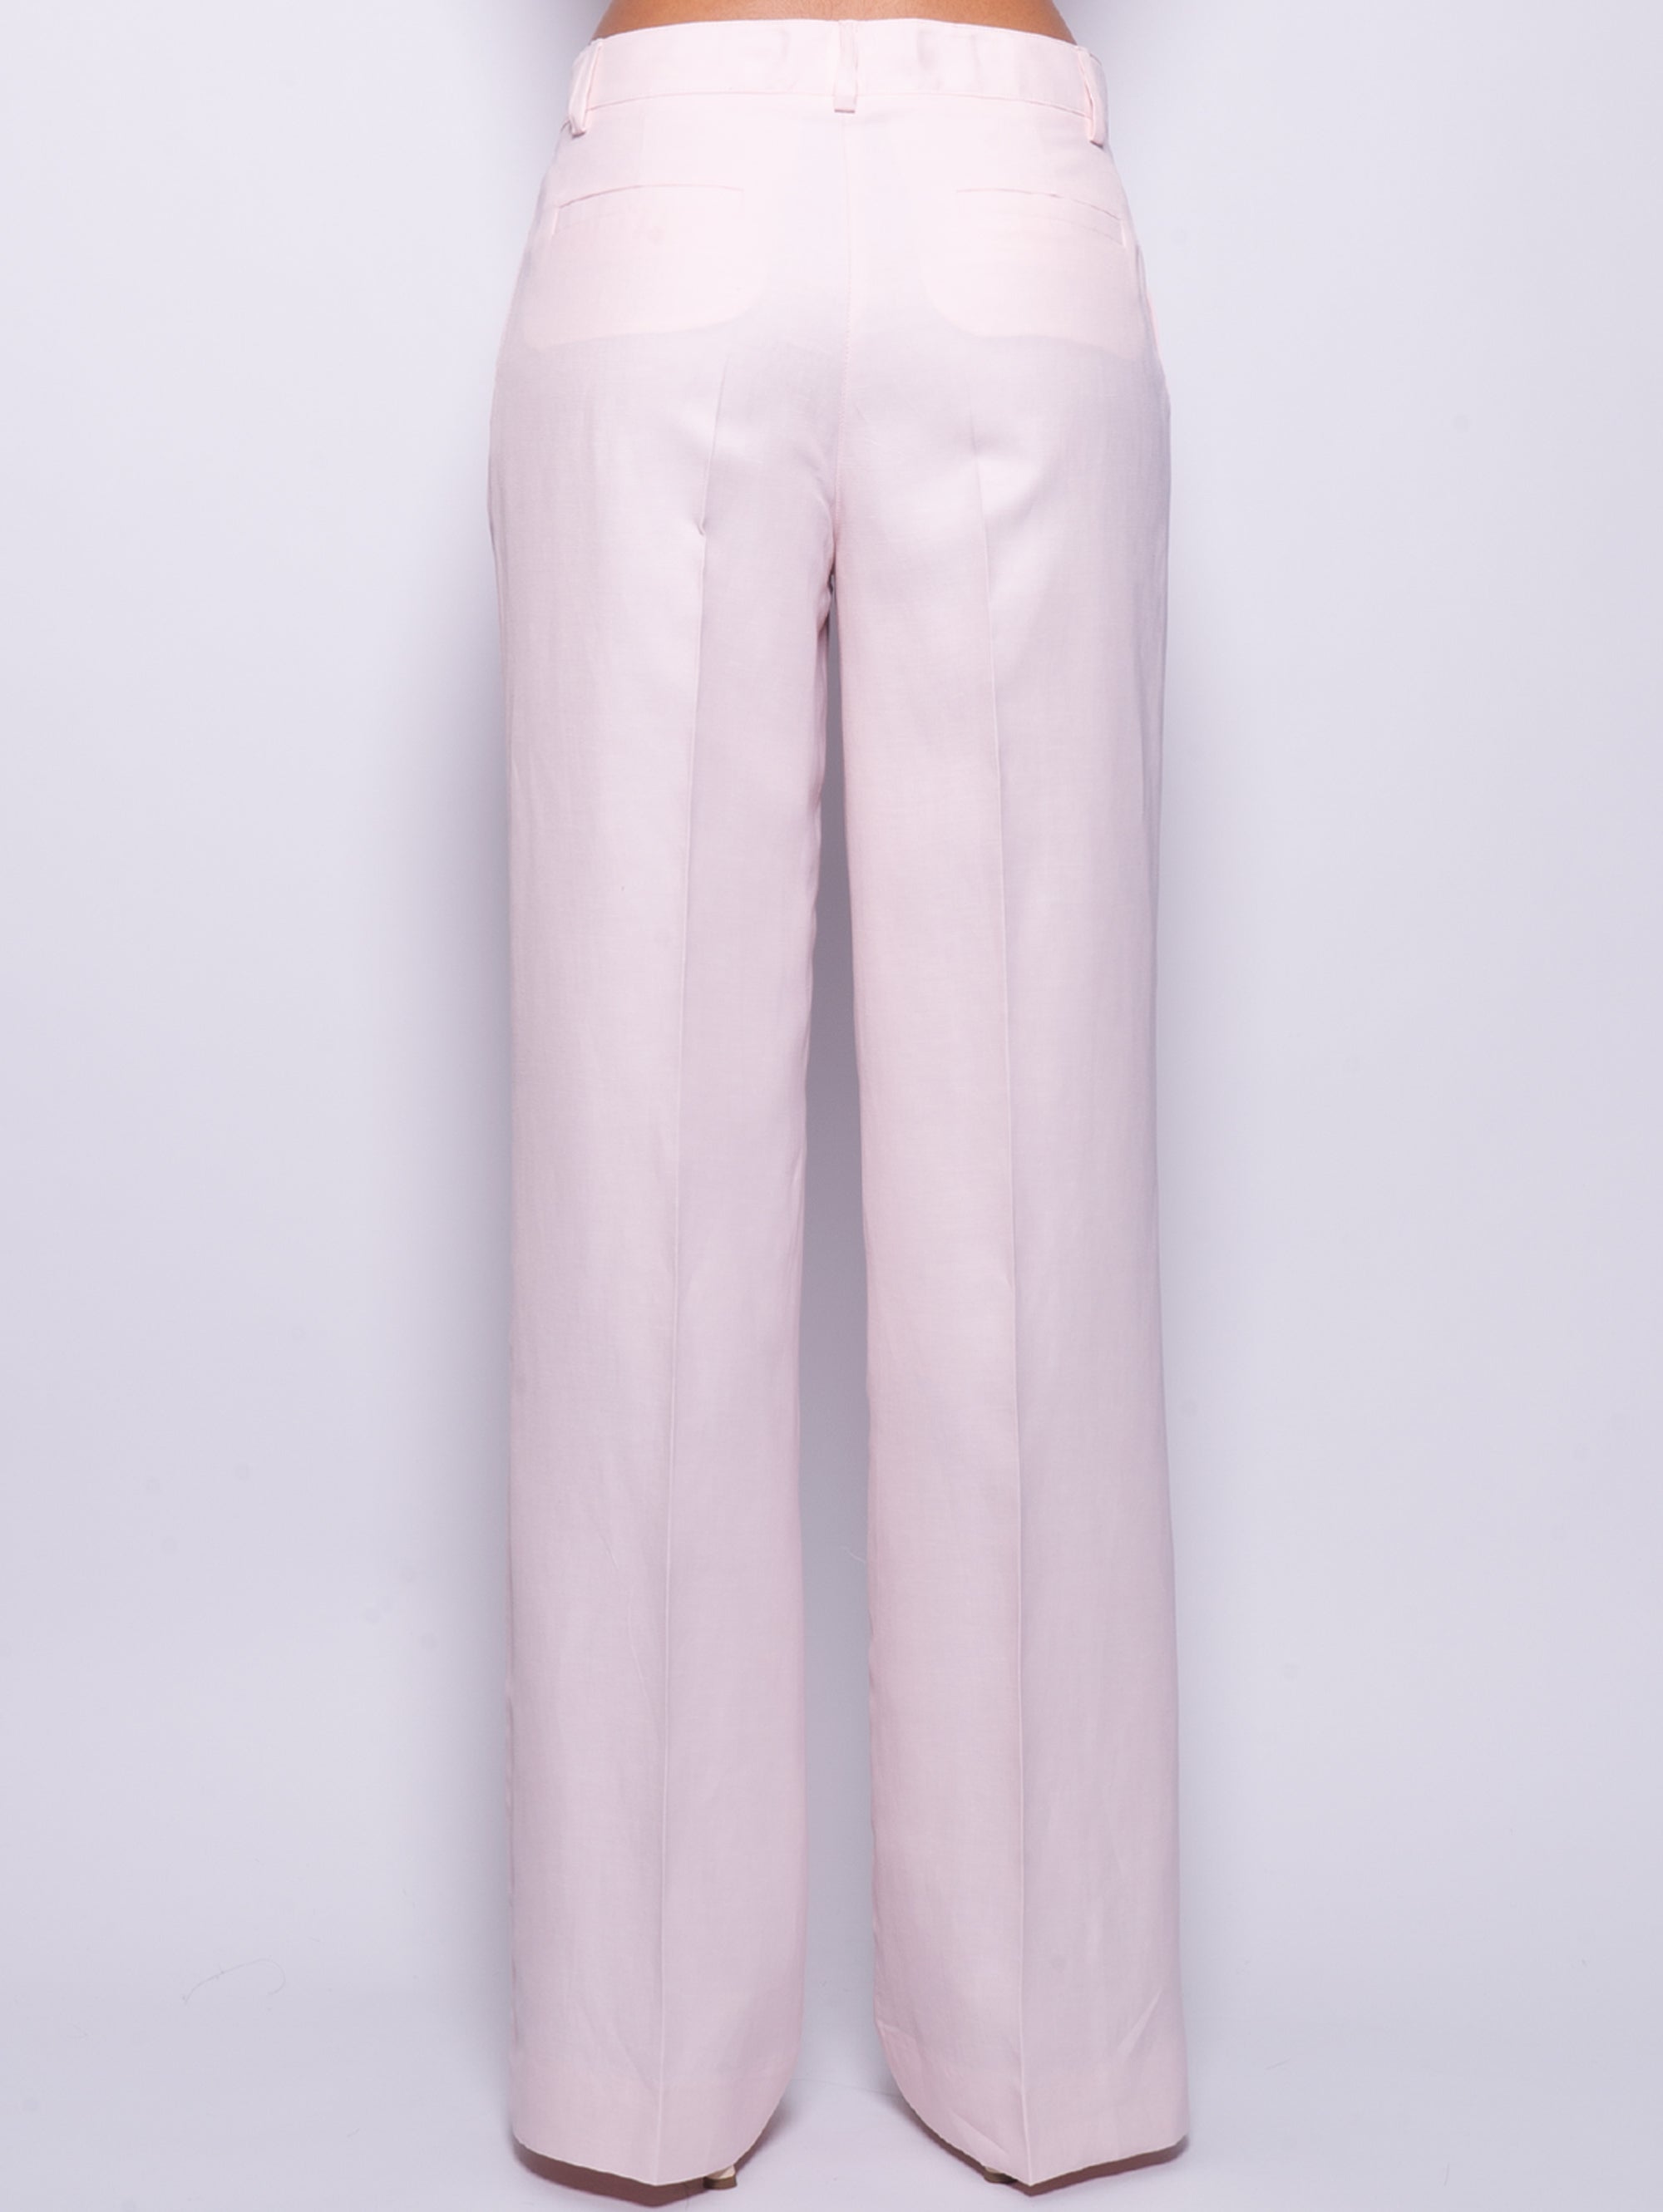 Palazzo trousers in Peach Blossom Linen